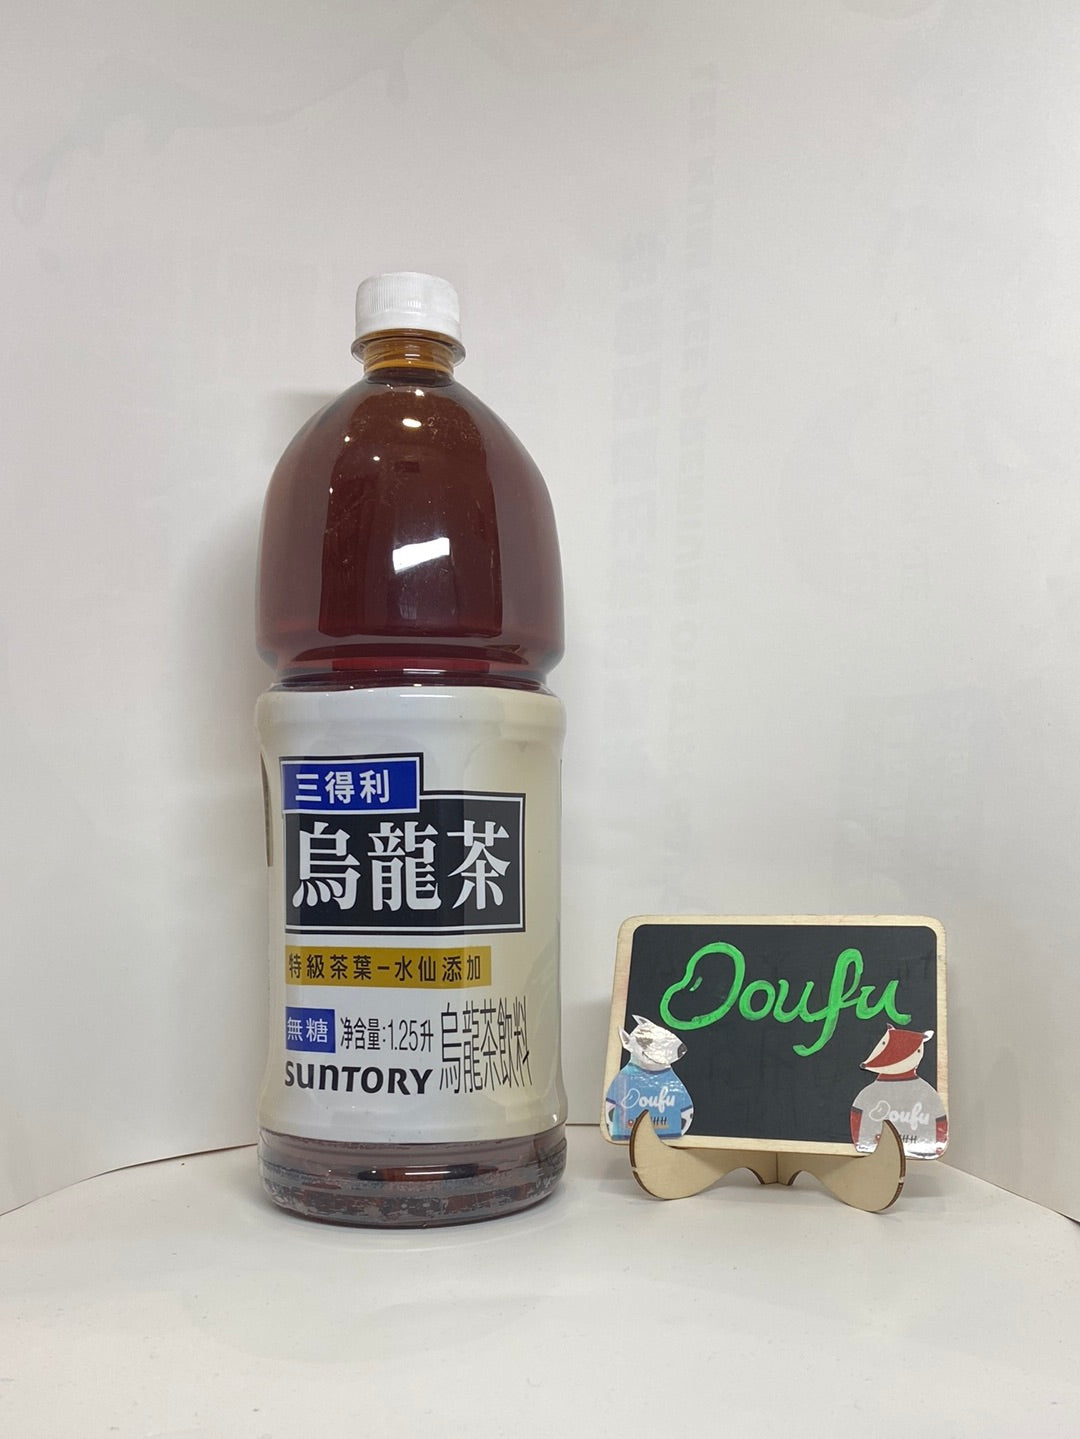 SDL OOLONG TEA DRINK SDLWLCYL WT 1.5L 三得利乌龙茶无糖大瓶